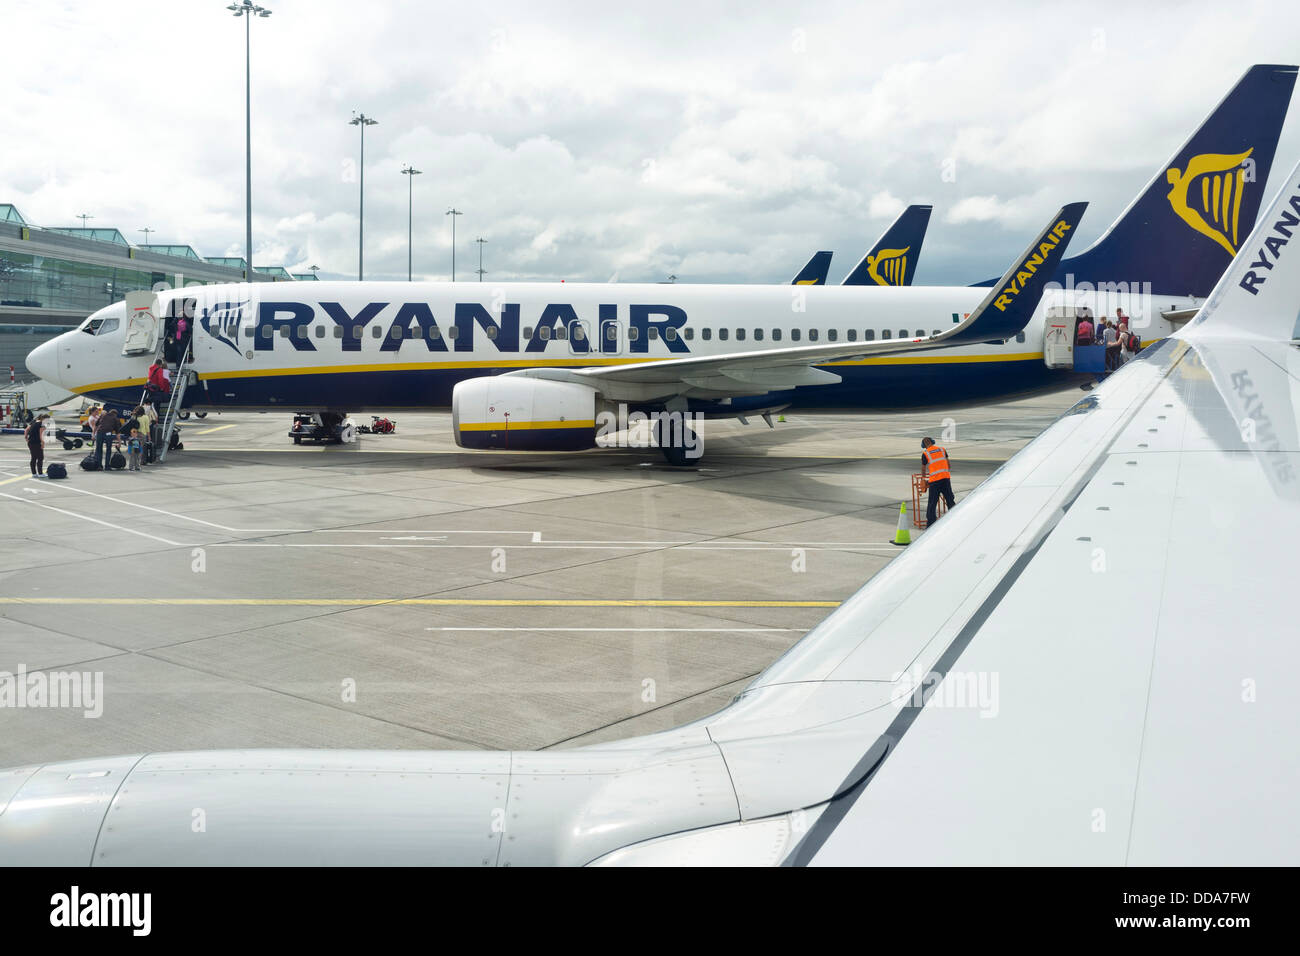 Ryanair airbus 320 aircraft on the tarmac at Dublin airport, Ireland. Stock Photo